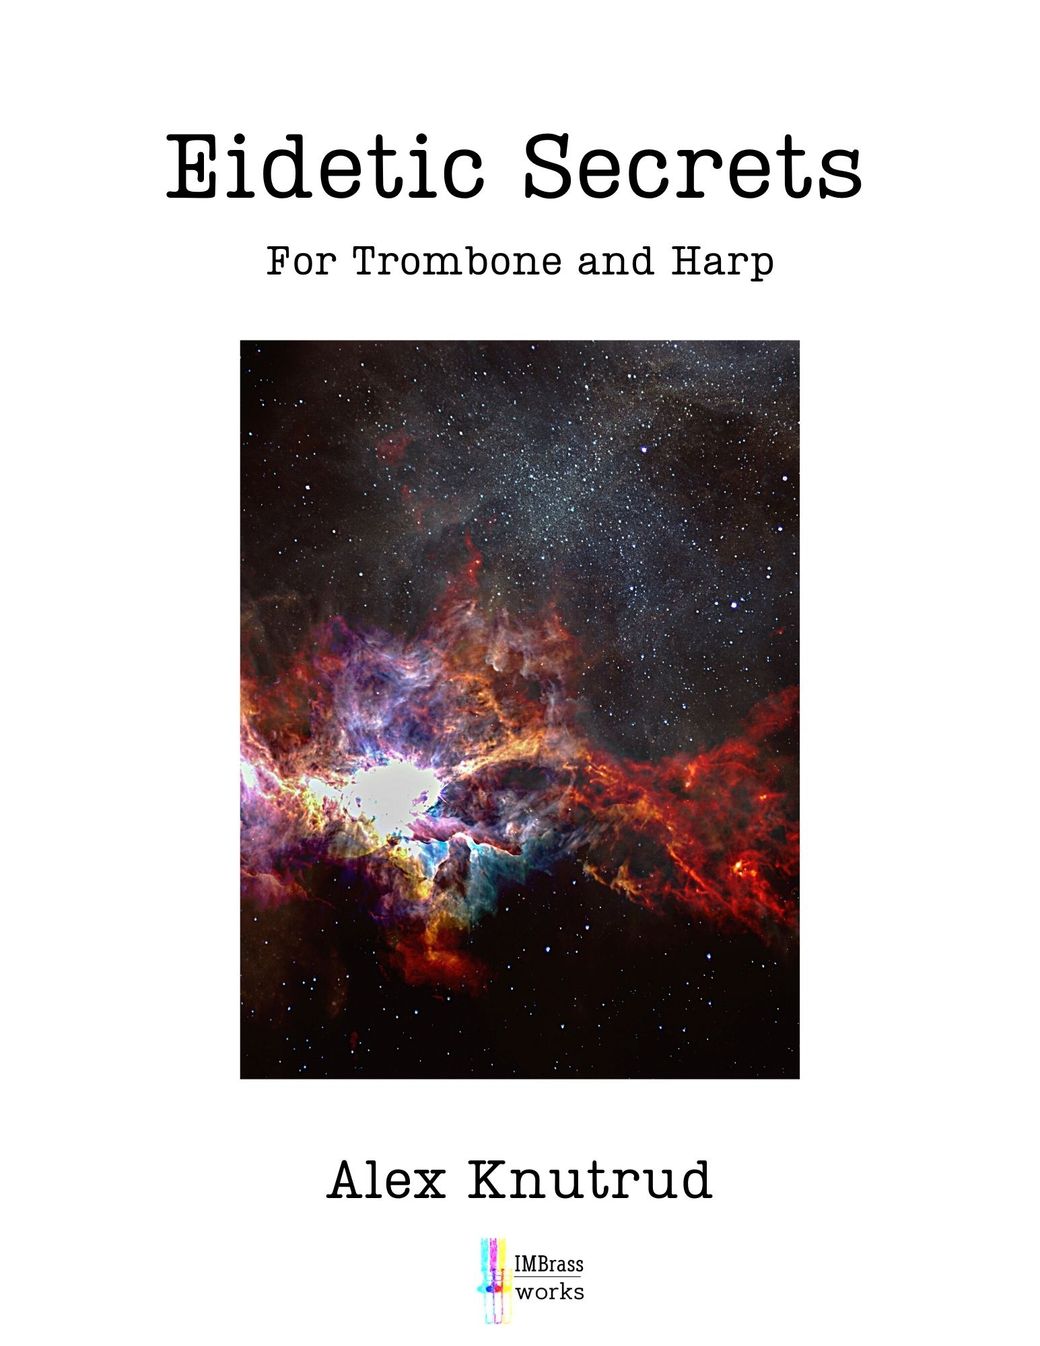 Alex Knutrud: Eidetic Secrets for Trombone and Harp